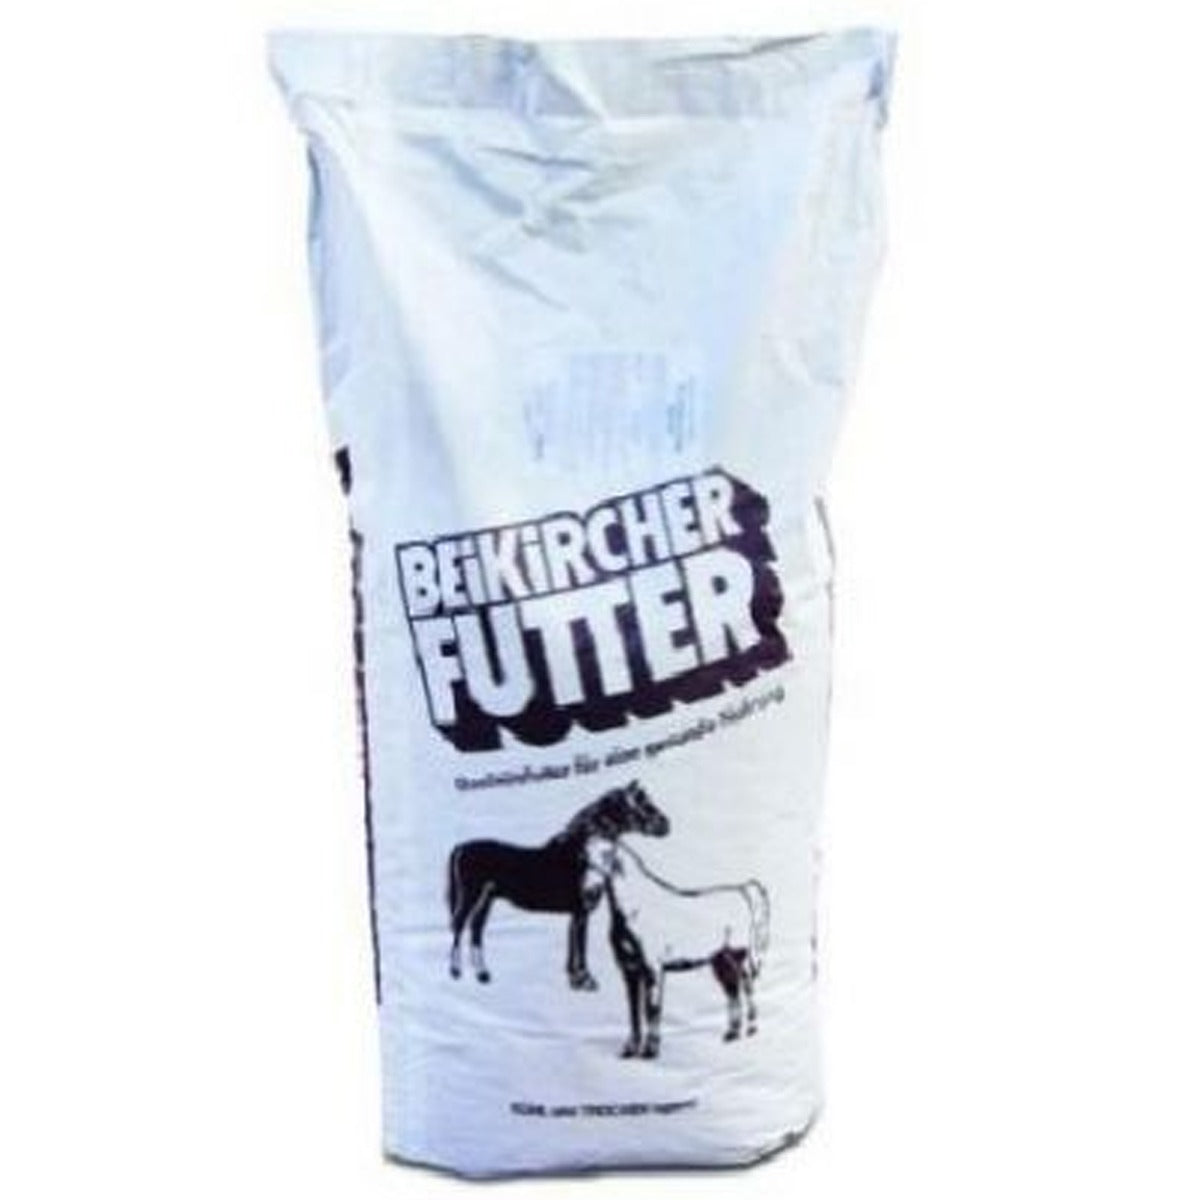 Mangime Beikircher di alta' qualita'per Cavalli arrichito con vitamine sali minerali 30kg